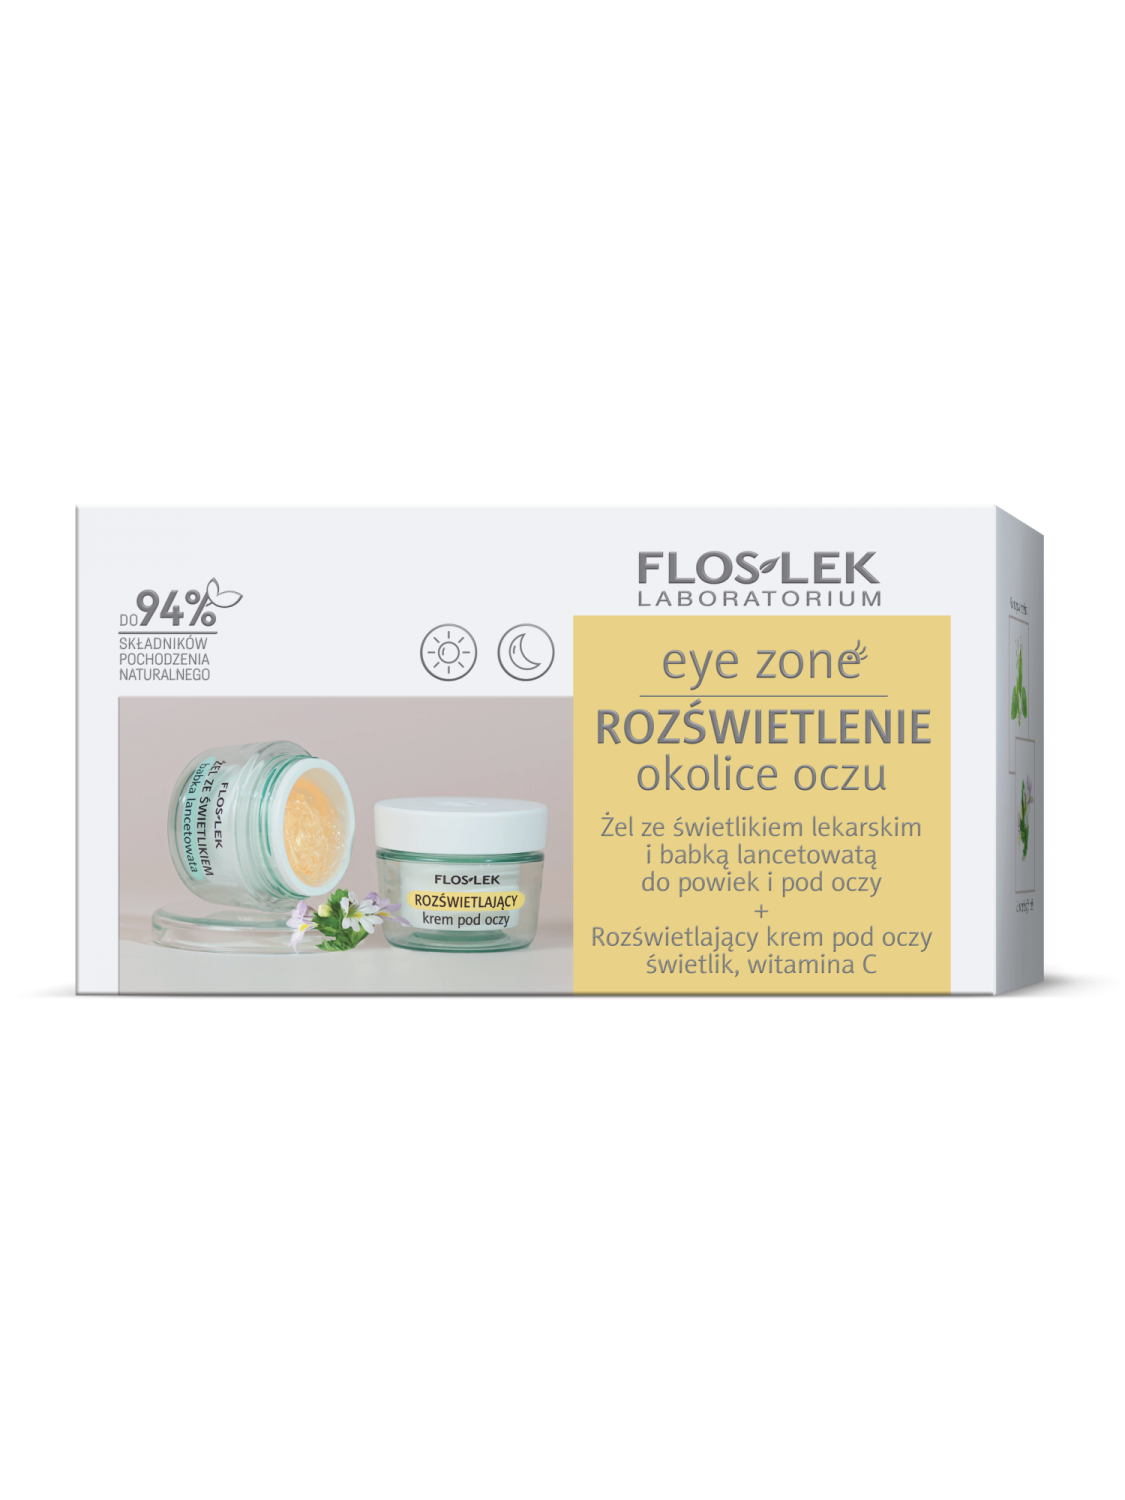 EYE ZONE Illuminate the eye area - Floslek kit